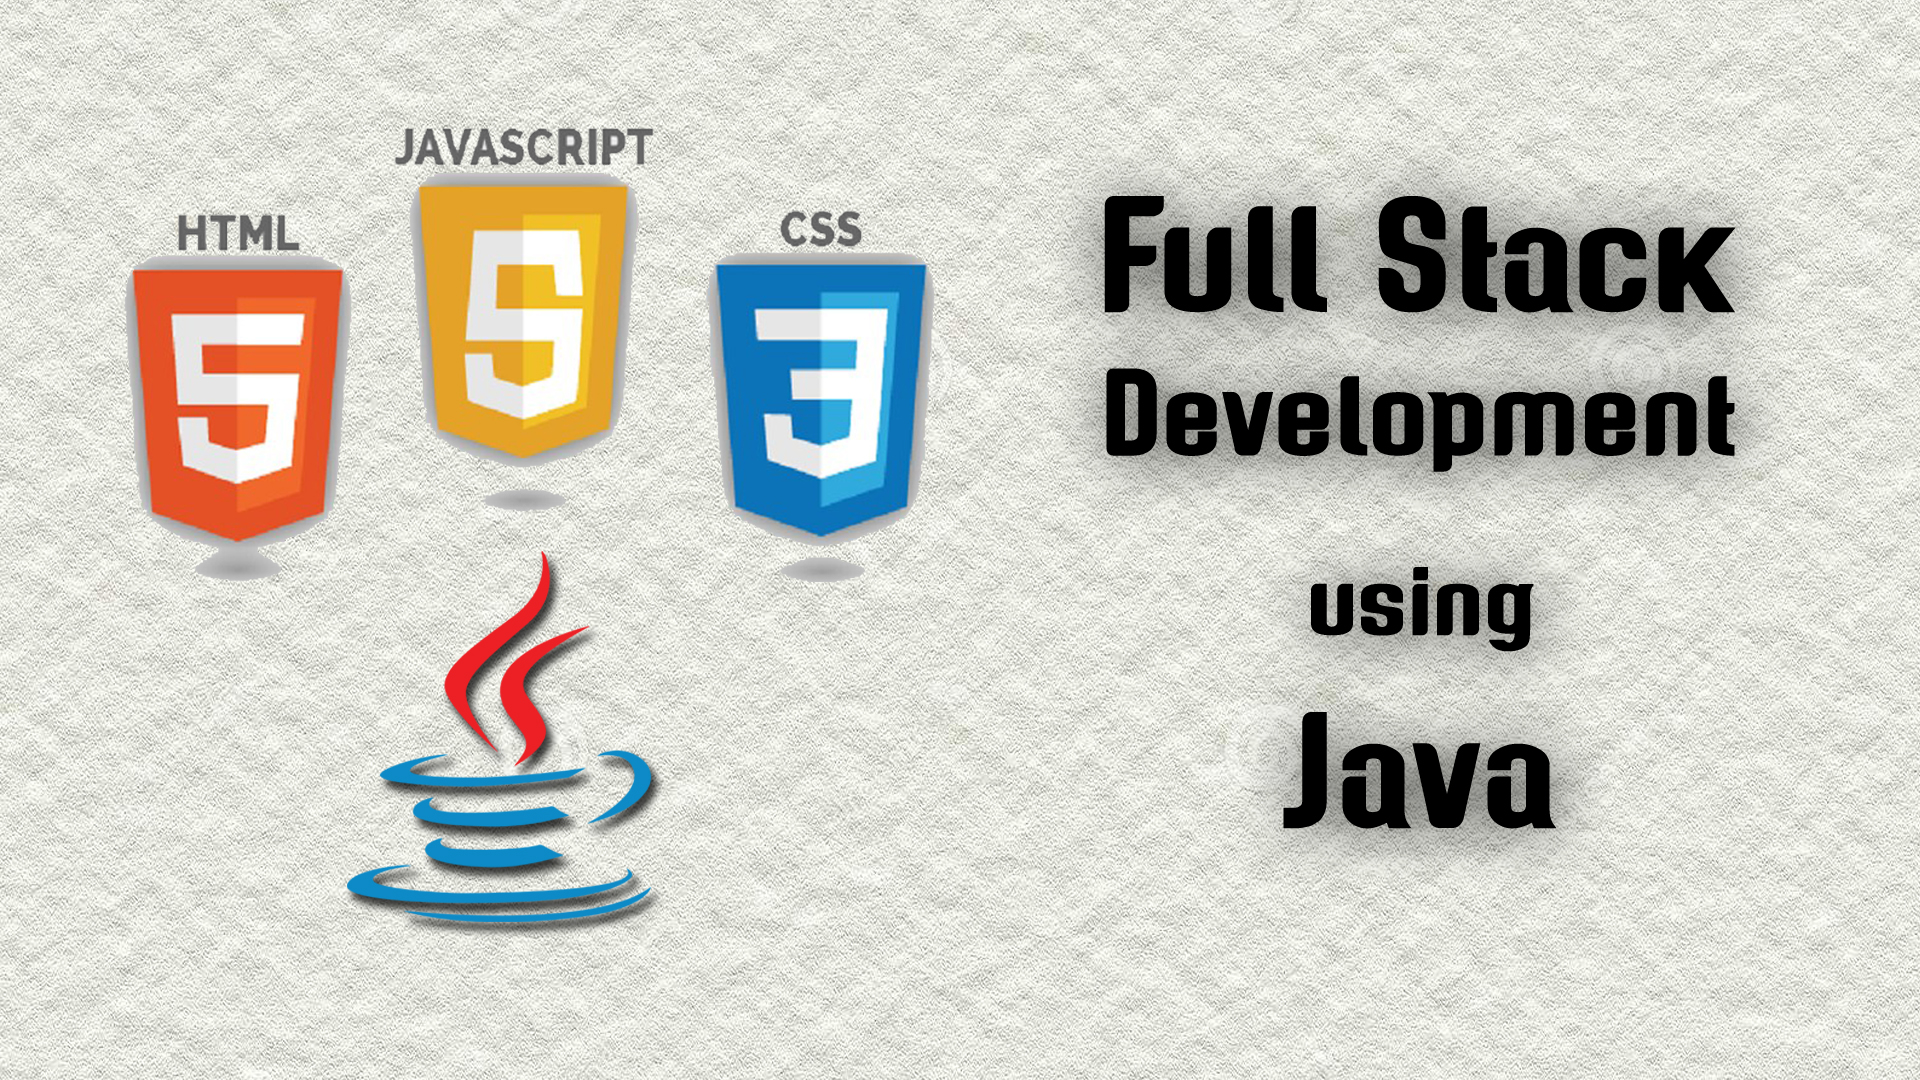 Full Stack Development using Java